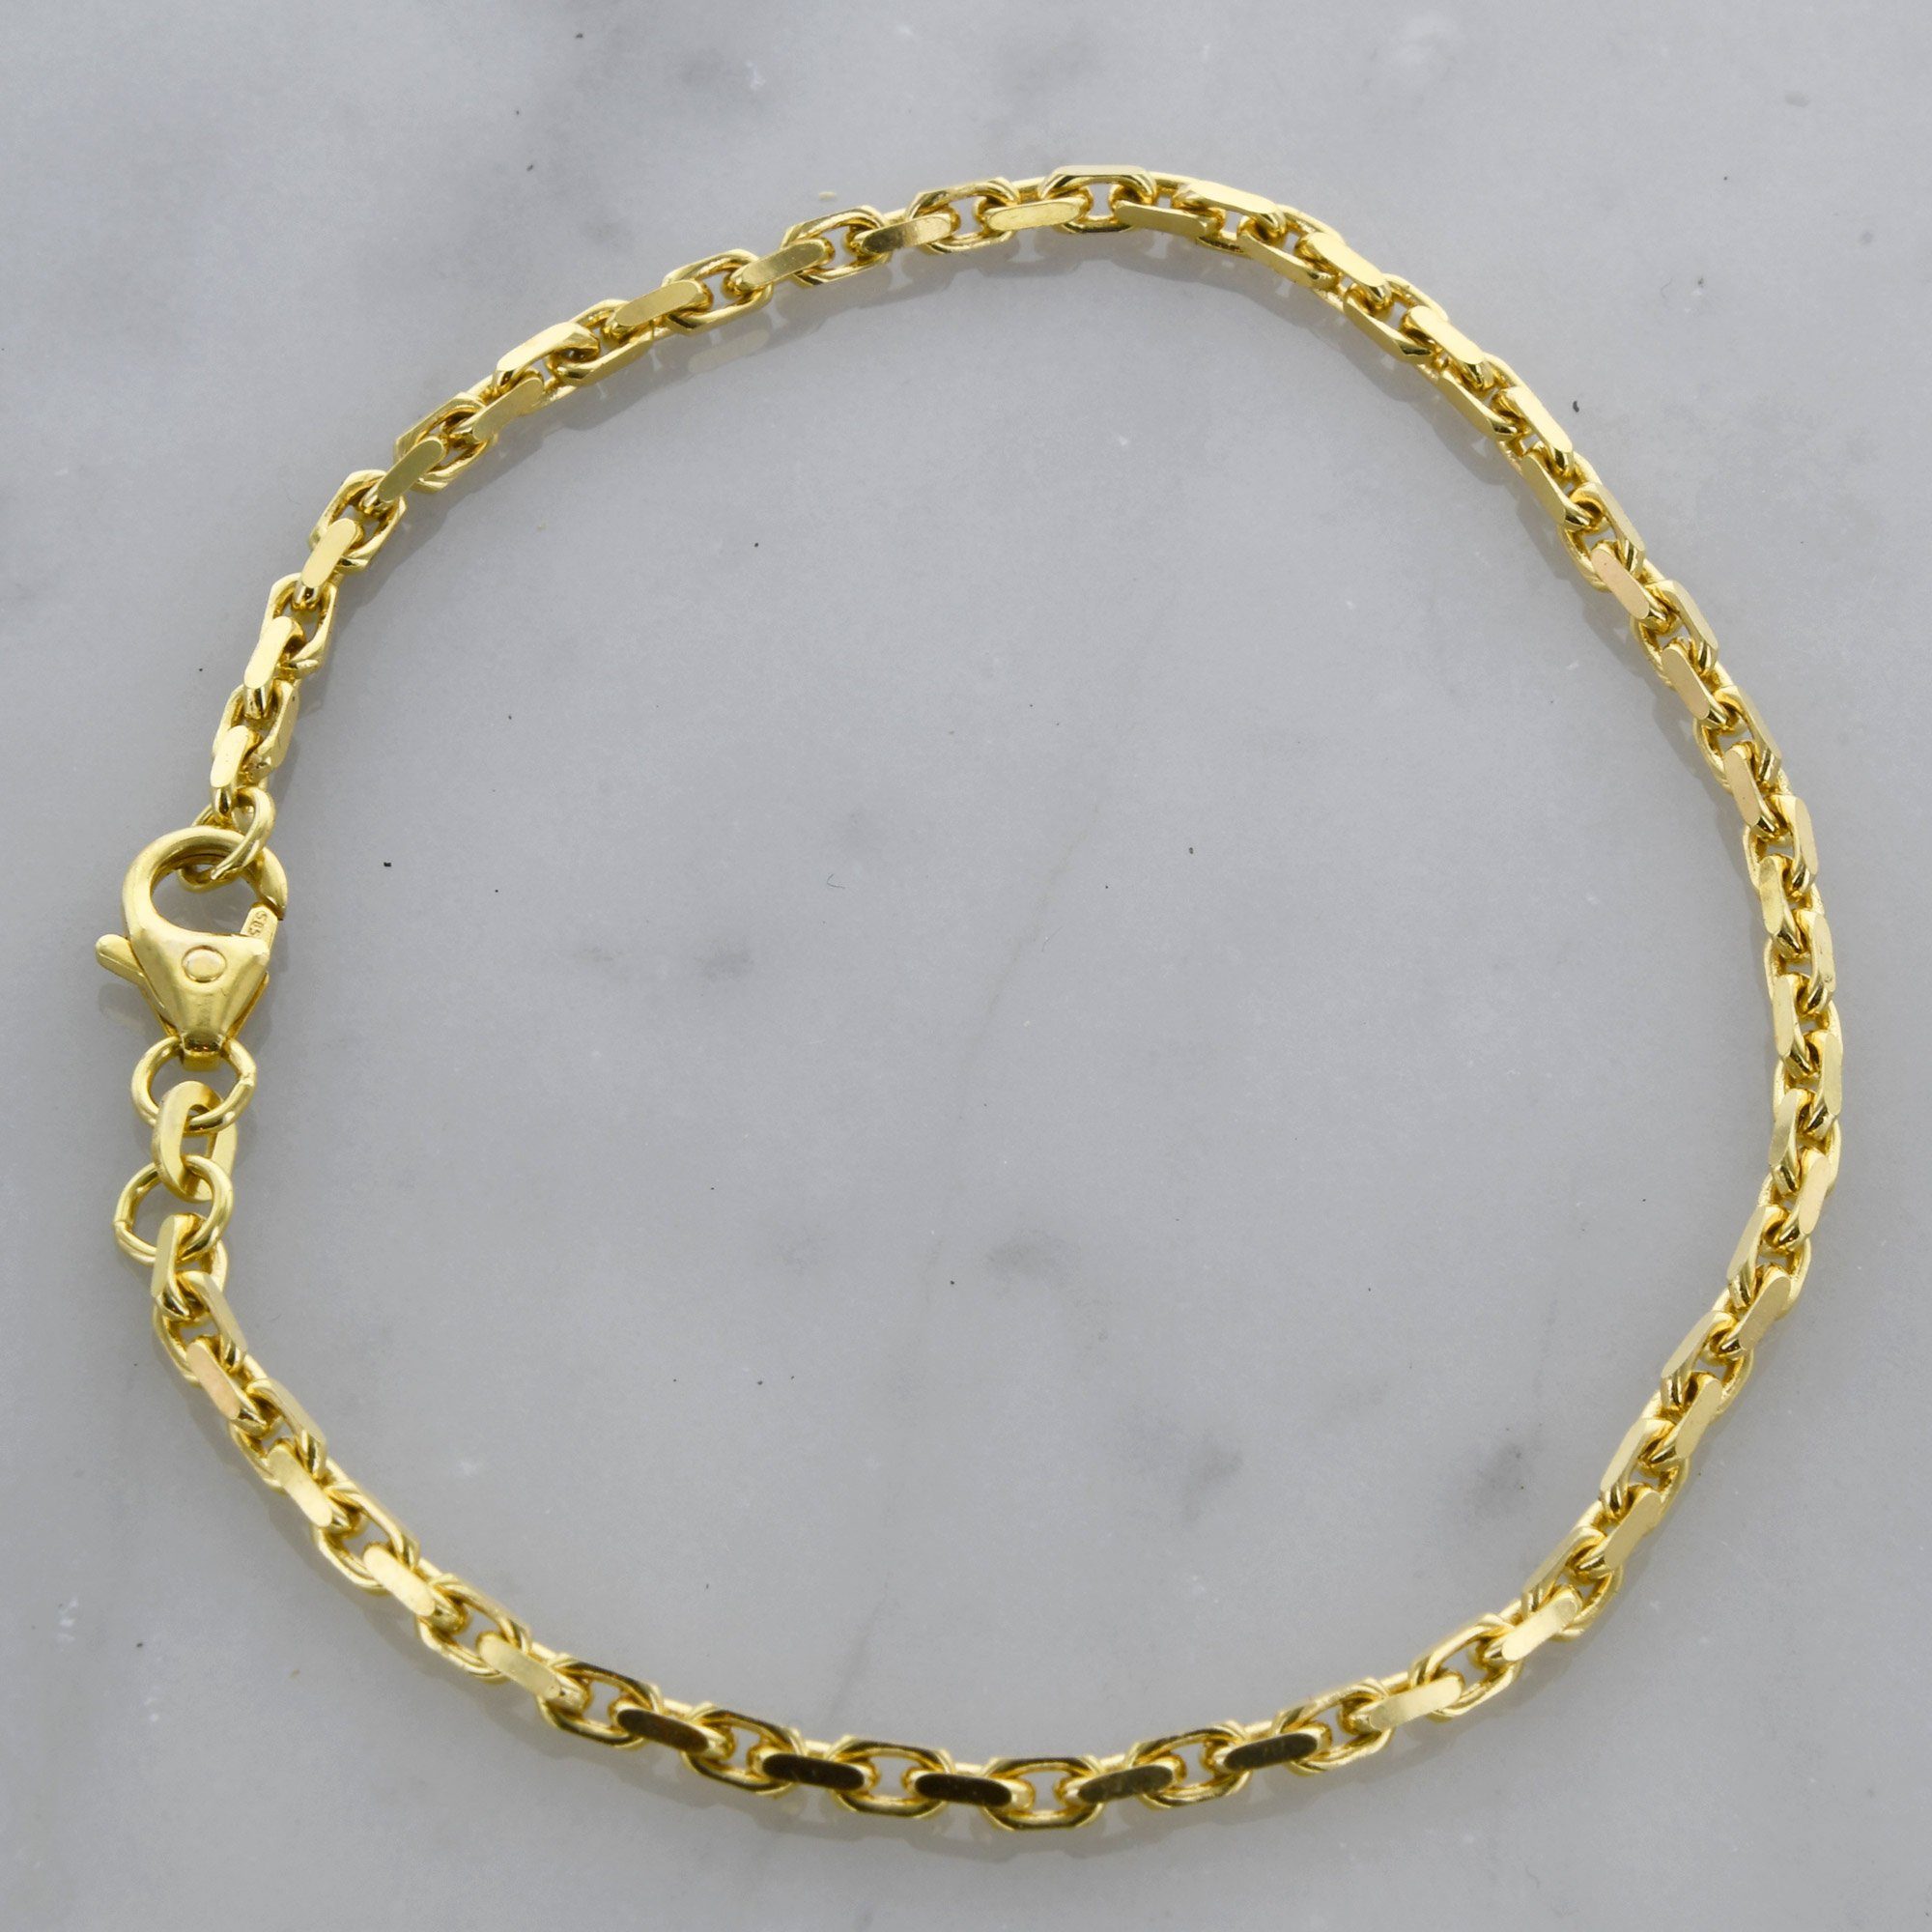 HOPLO Goldarmband Ankerkette diamantiert Länge 18,7cm - Breite 2,5mm - 333-8 Karat Gold